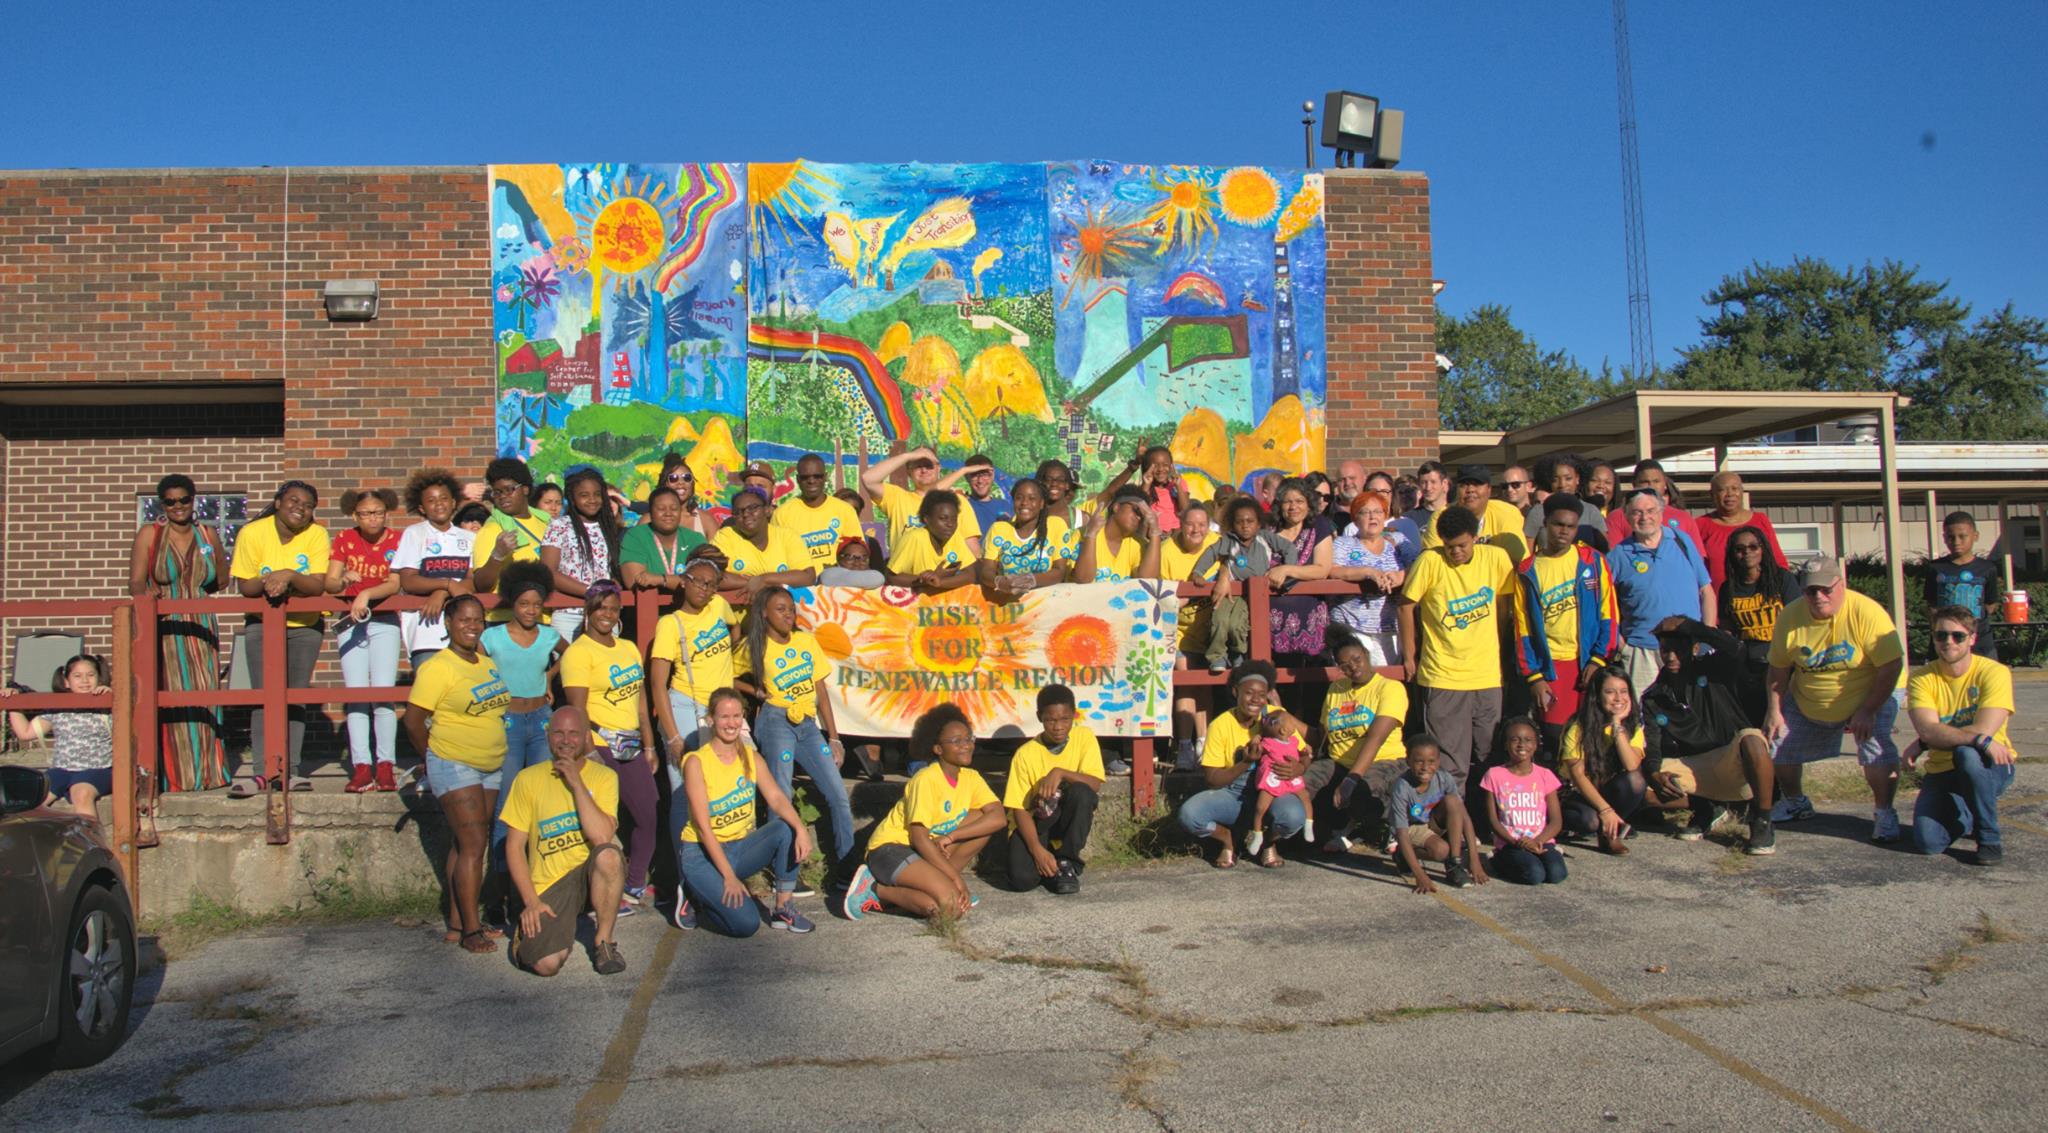 Credit: Hagelberg and Gary community members pose in front of a mural created as part of Calumet Artist Residency's "Beyond Coal" renewable energy campaign. Credit: Calumet Artist Residency